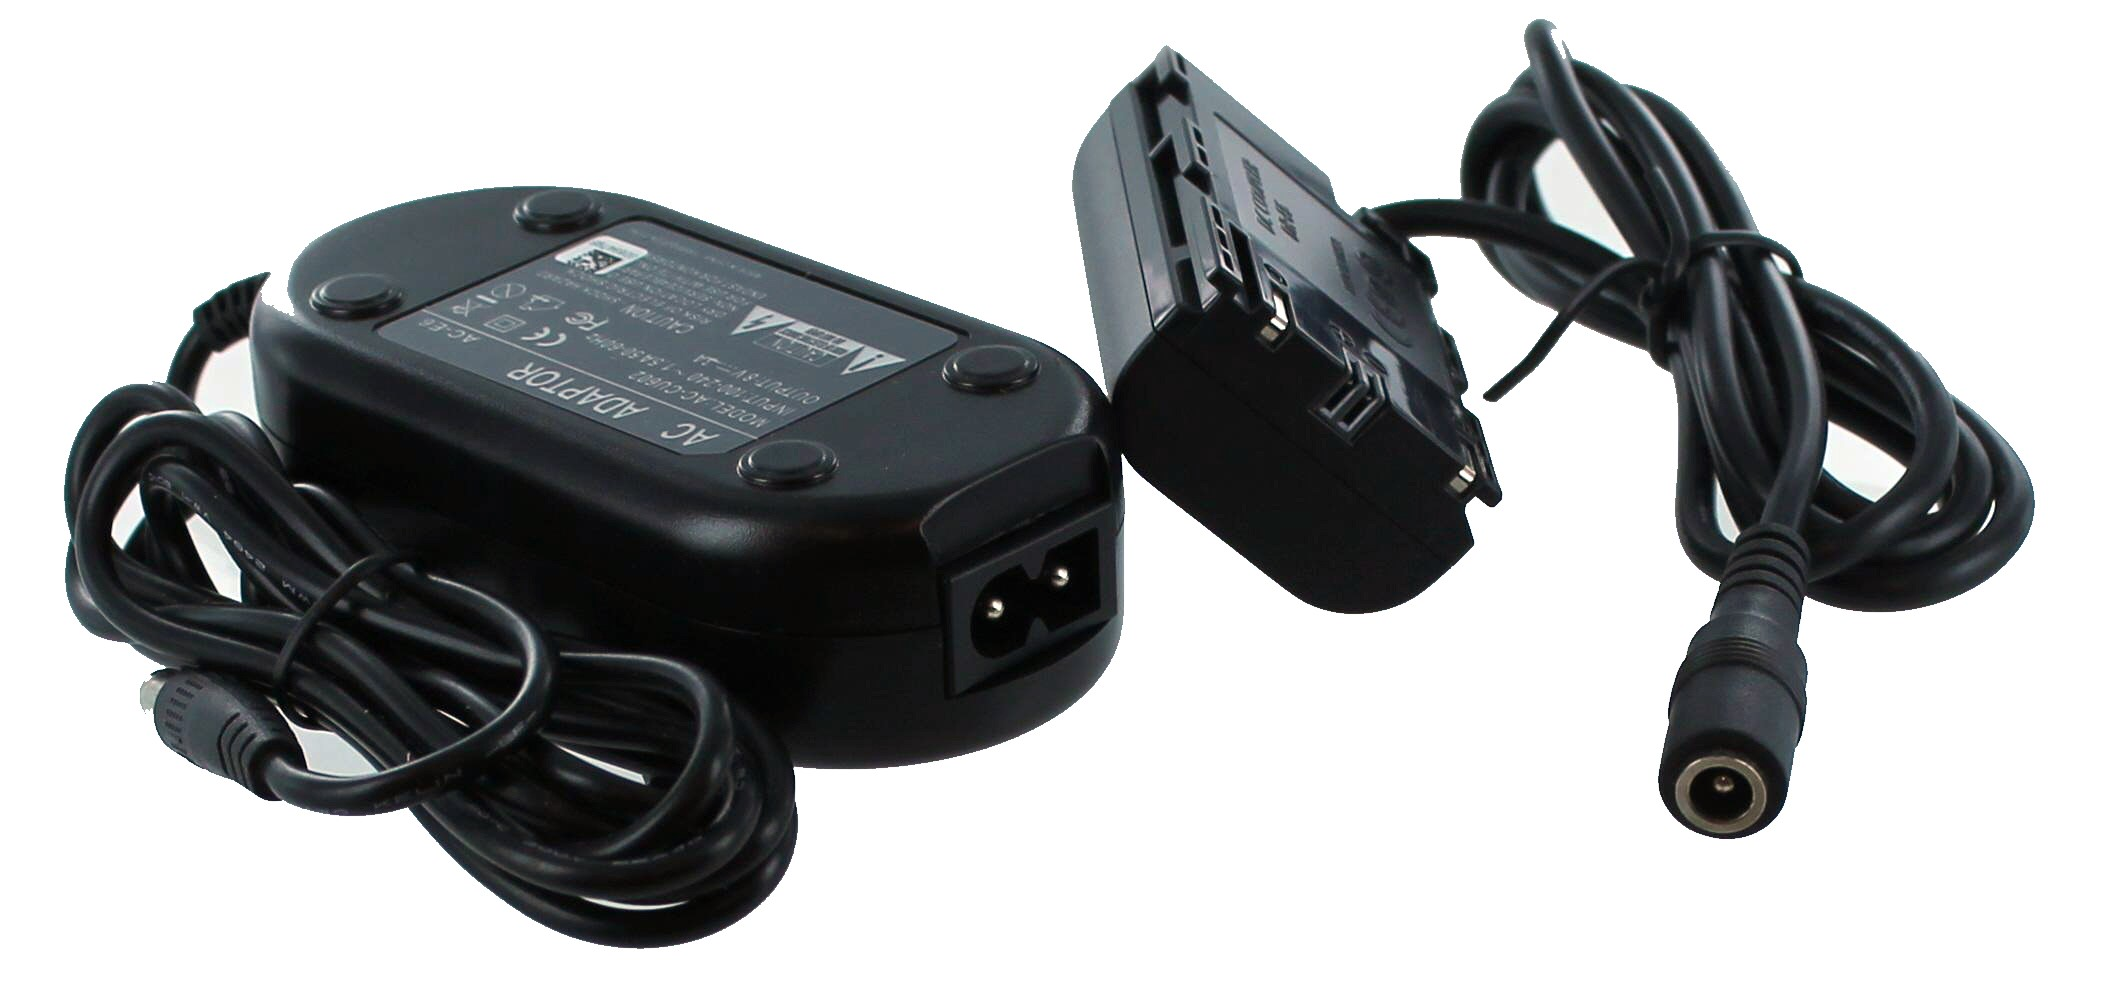 kompatibel mit 7.4 MOBILOTEC Volt, Canon 6D Netzteil/Ladegerät Canon, Netzteil-Kuppler schwarz EOS